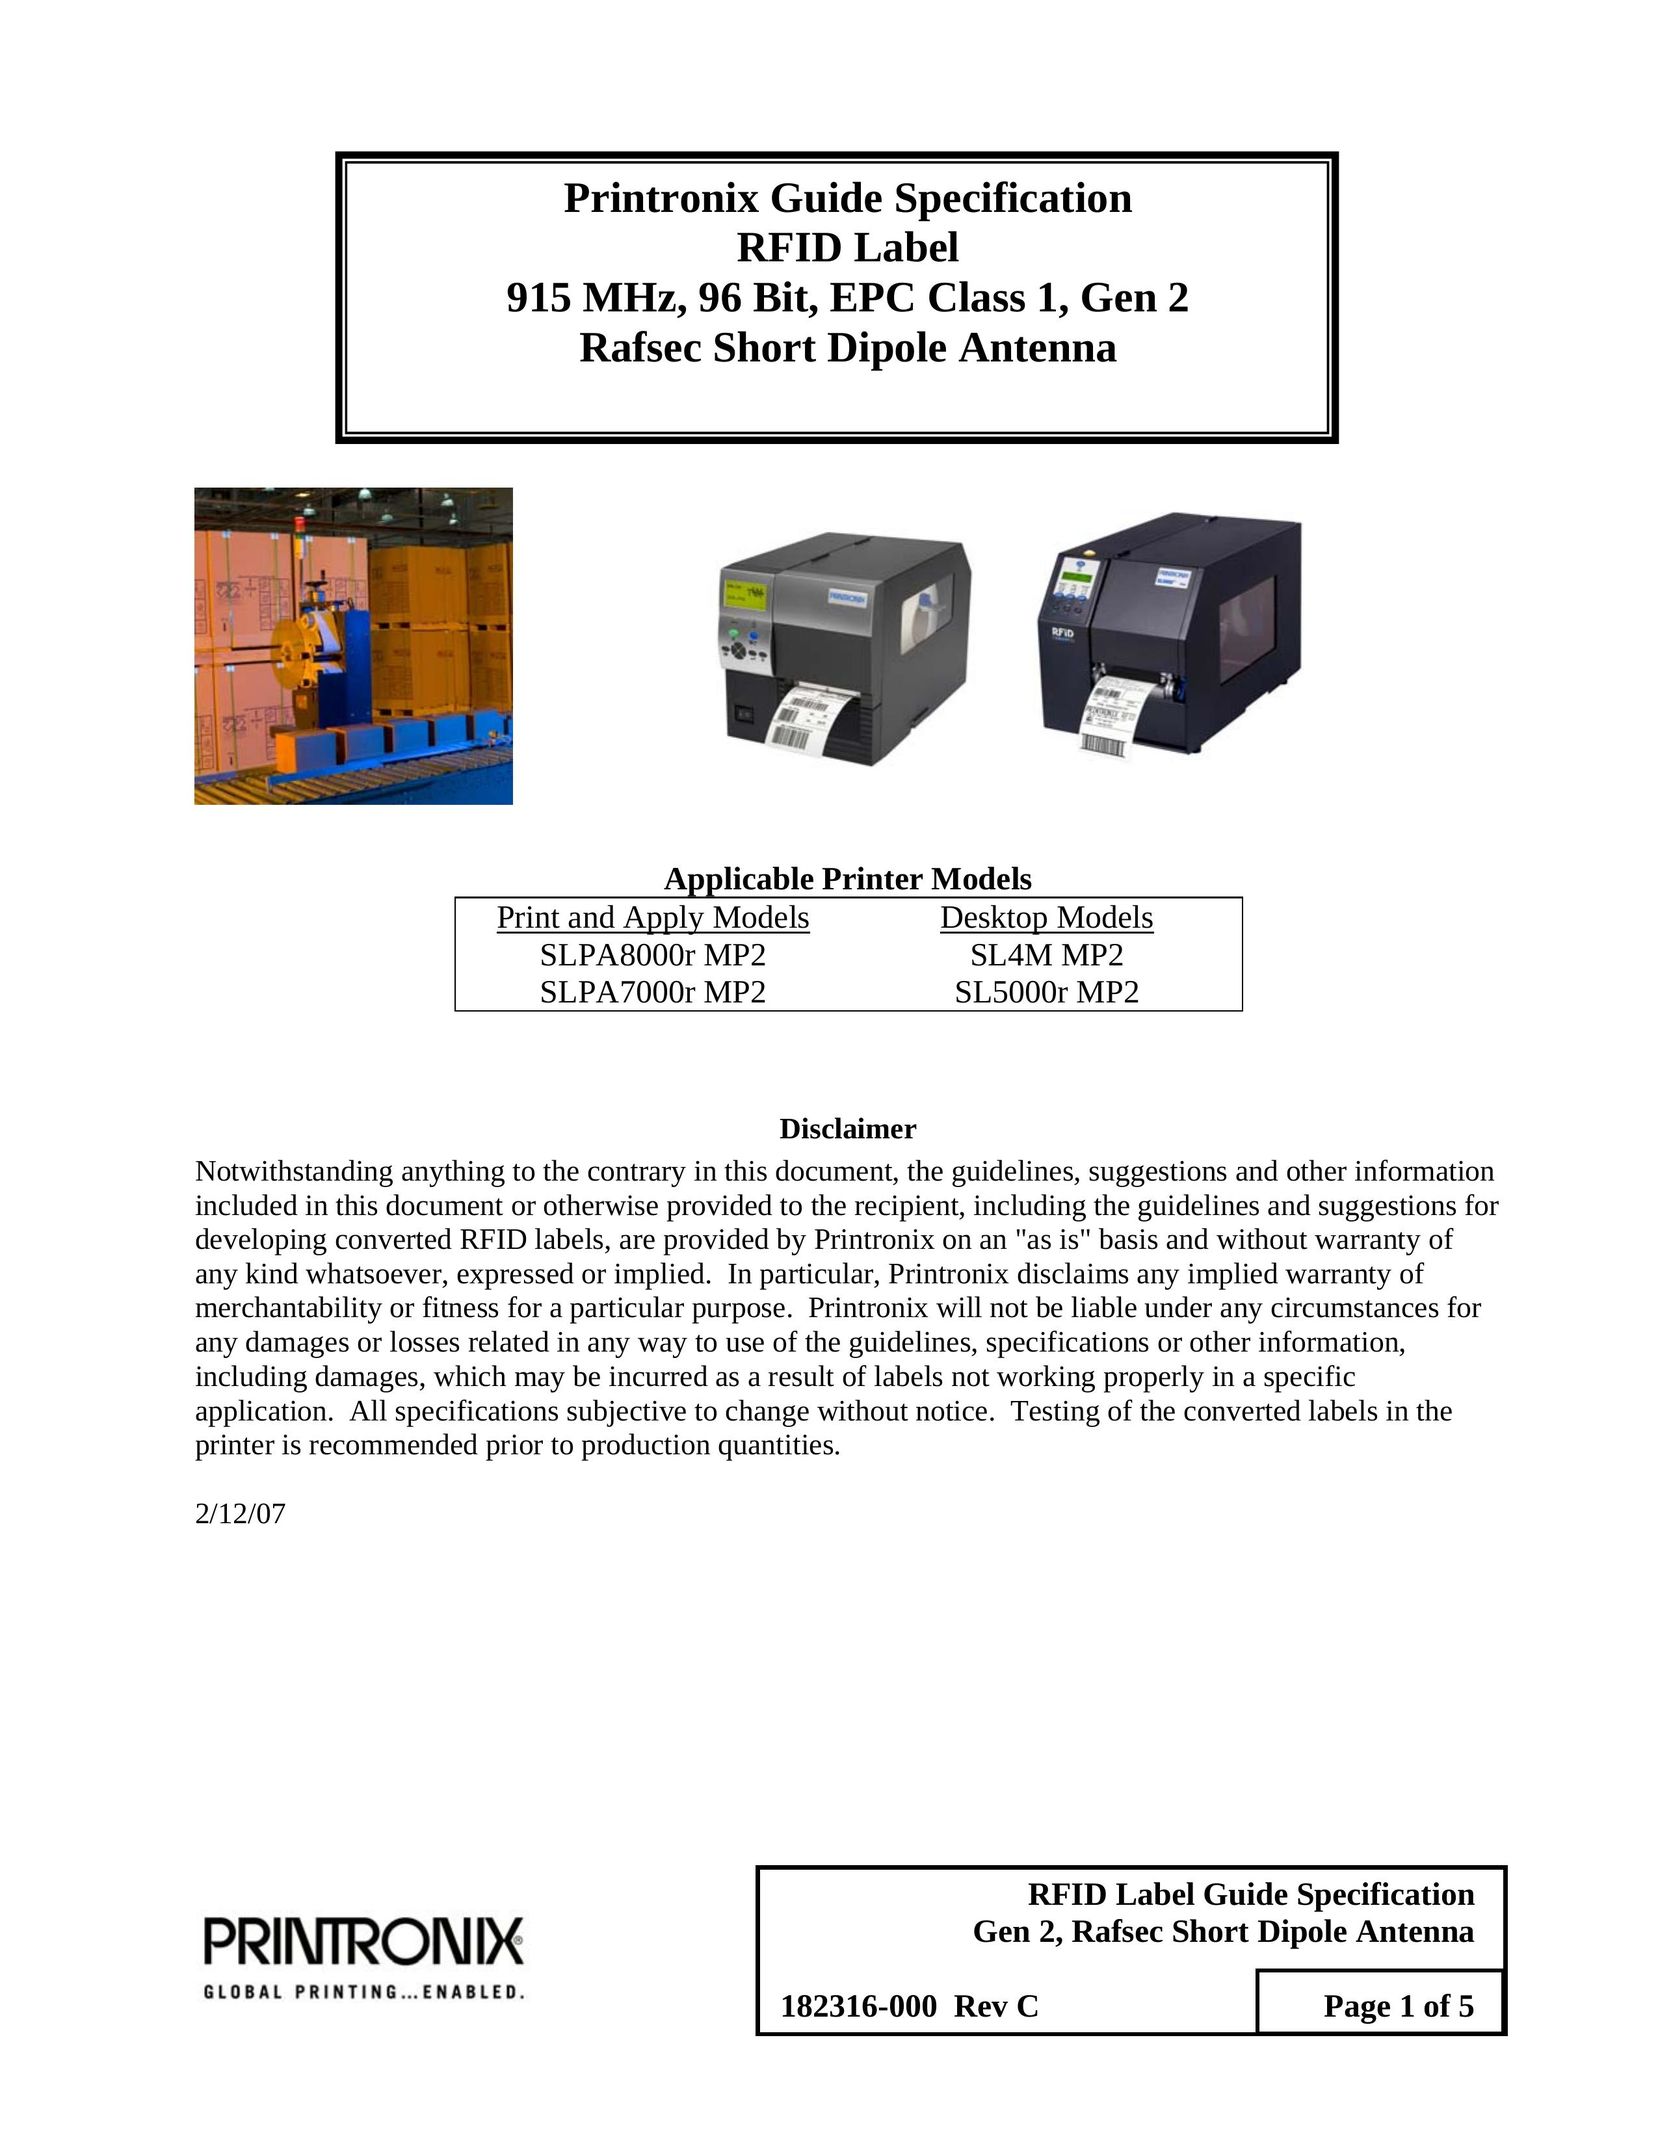 Printronix SL5000r MP2 Printer User Manual